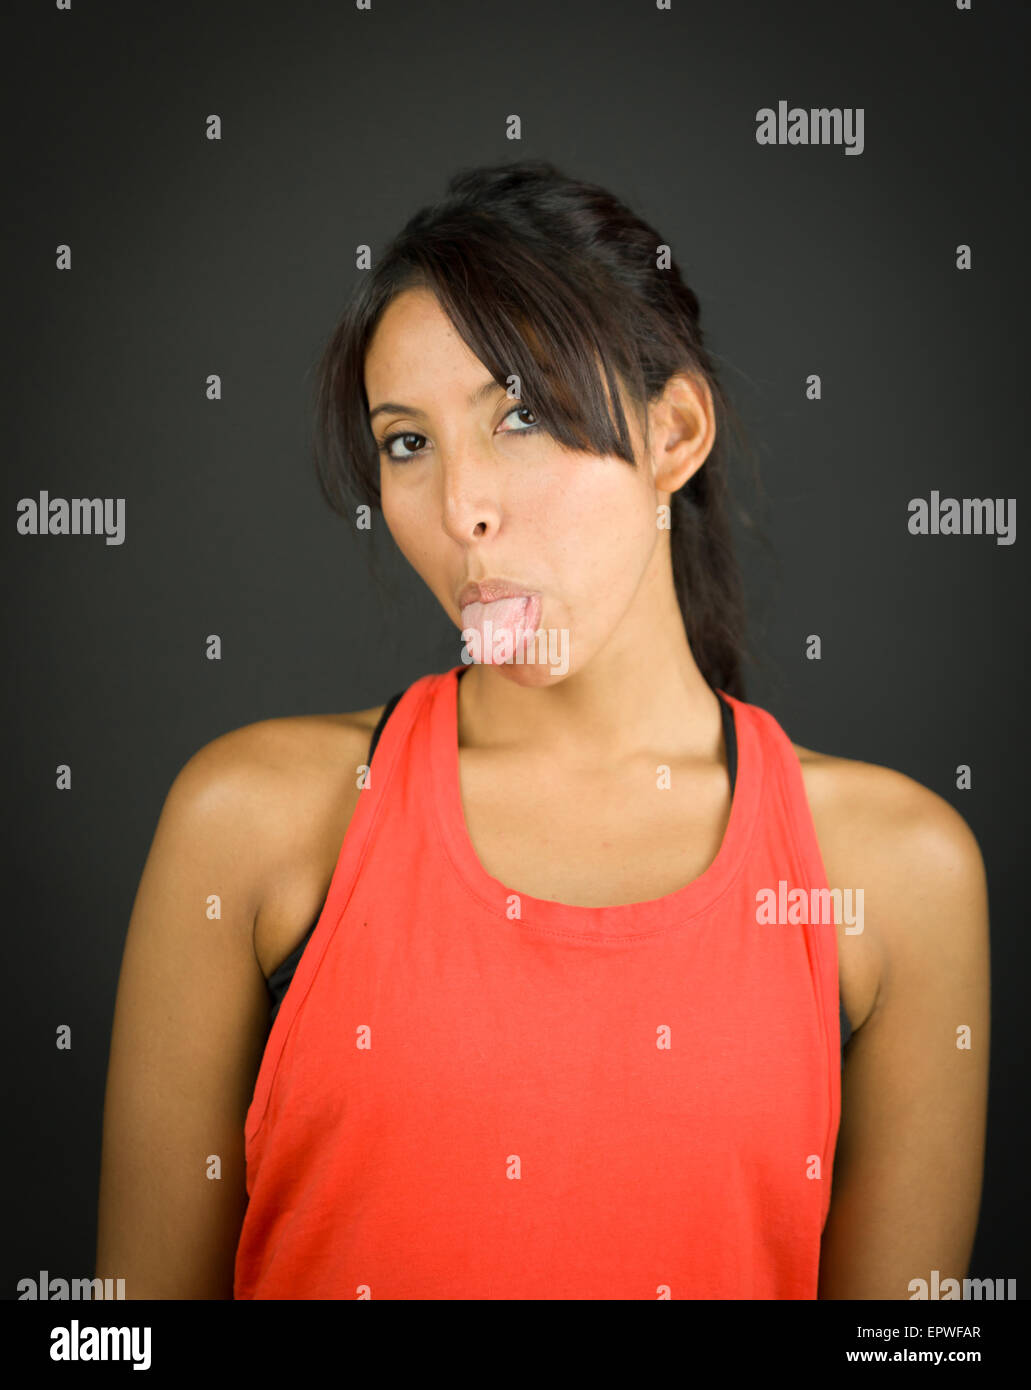 Attractive arabic woman in studio isolated on black Stock Photo